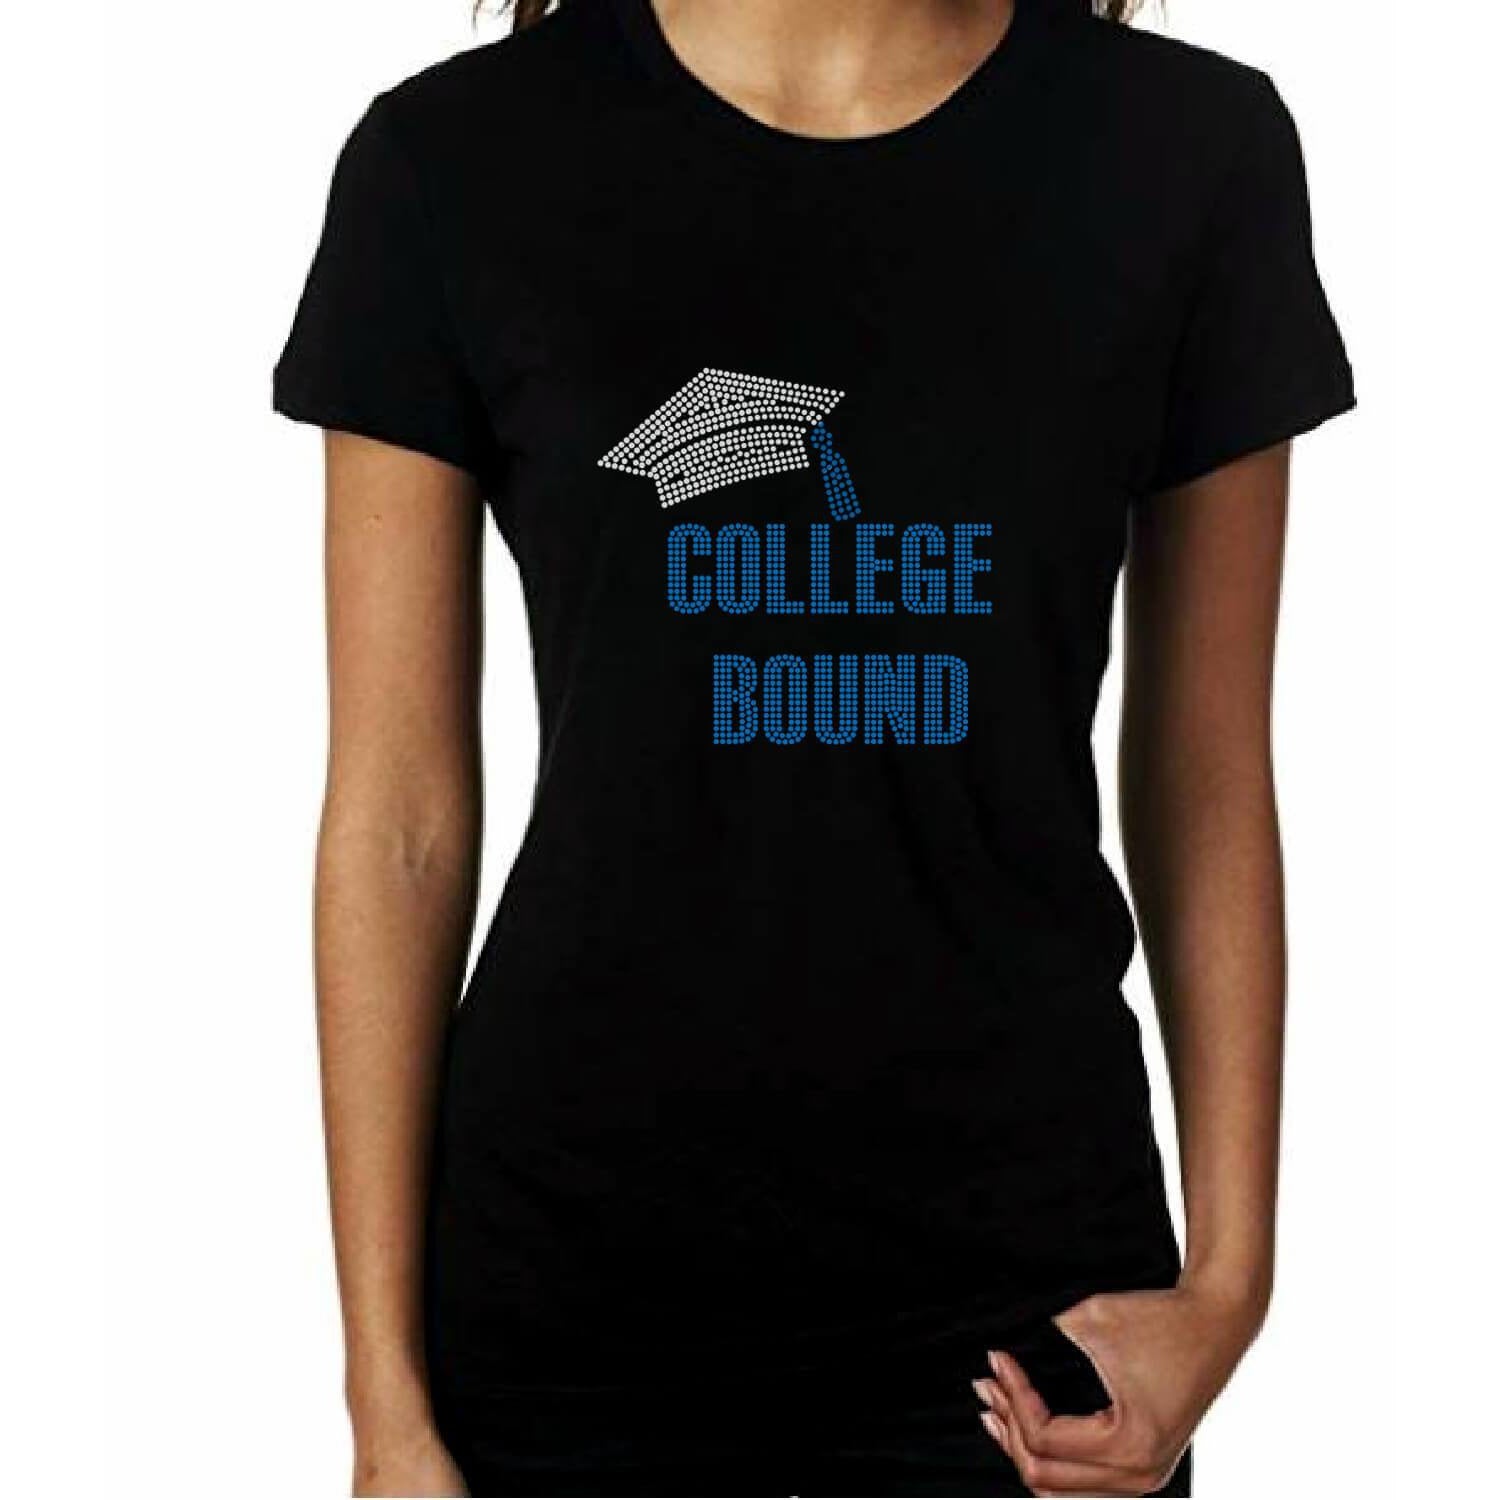 College Bound Rhinestone T-Shirt